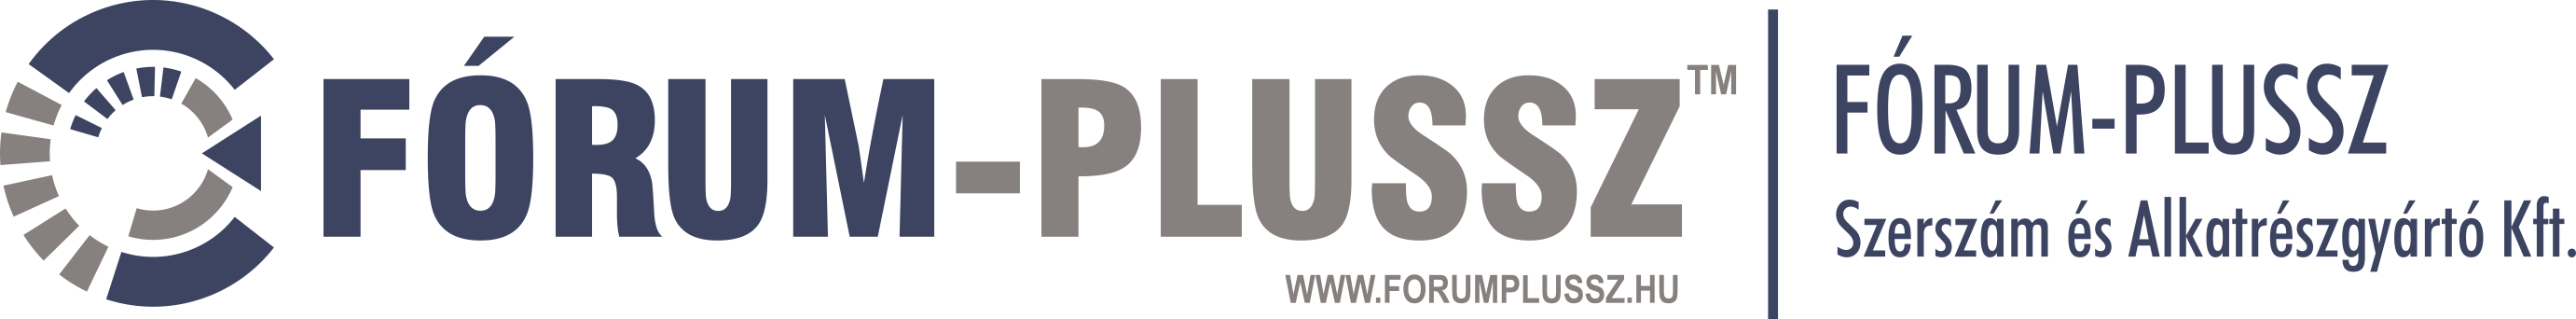 Fórum-Plussz GmbH.